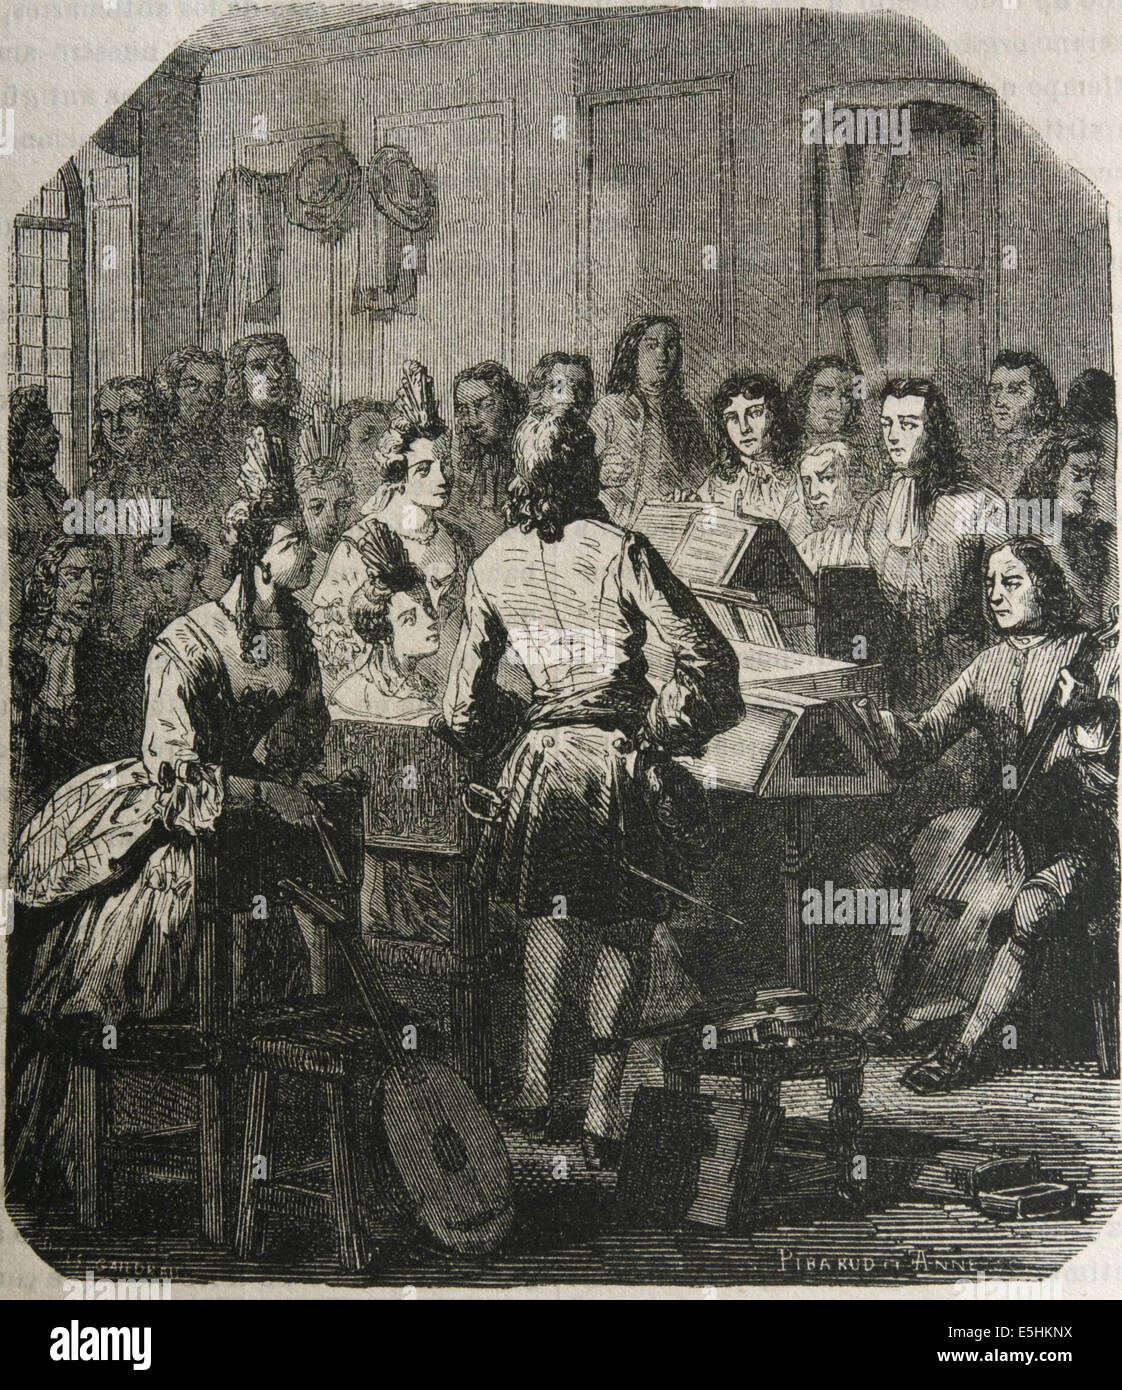 Thomas Britton (1657 1714). English charcoal merchant and concert promoter. Engravig by Ribaraud,1879. Stock Photo